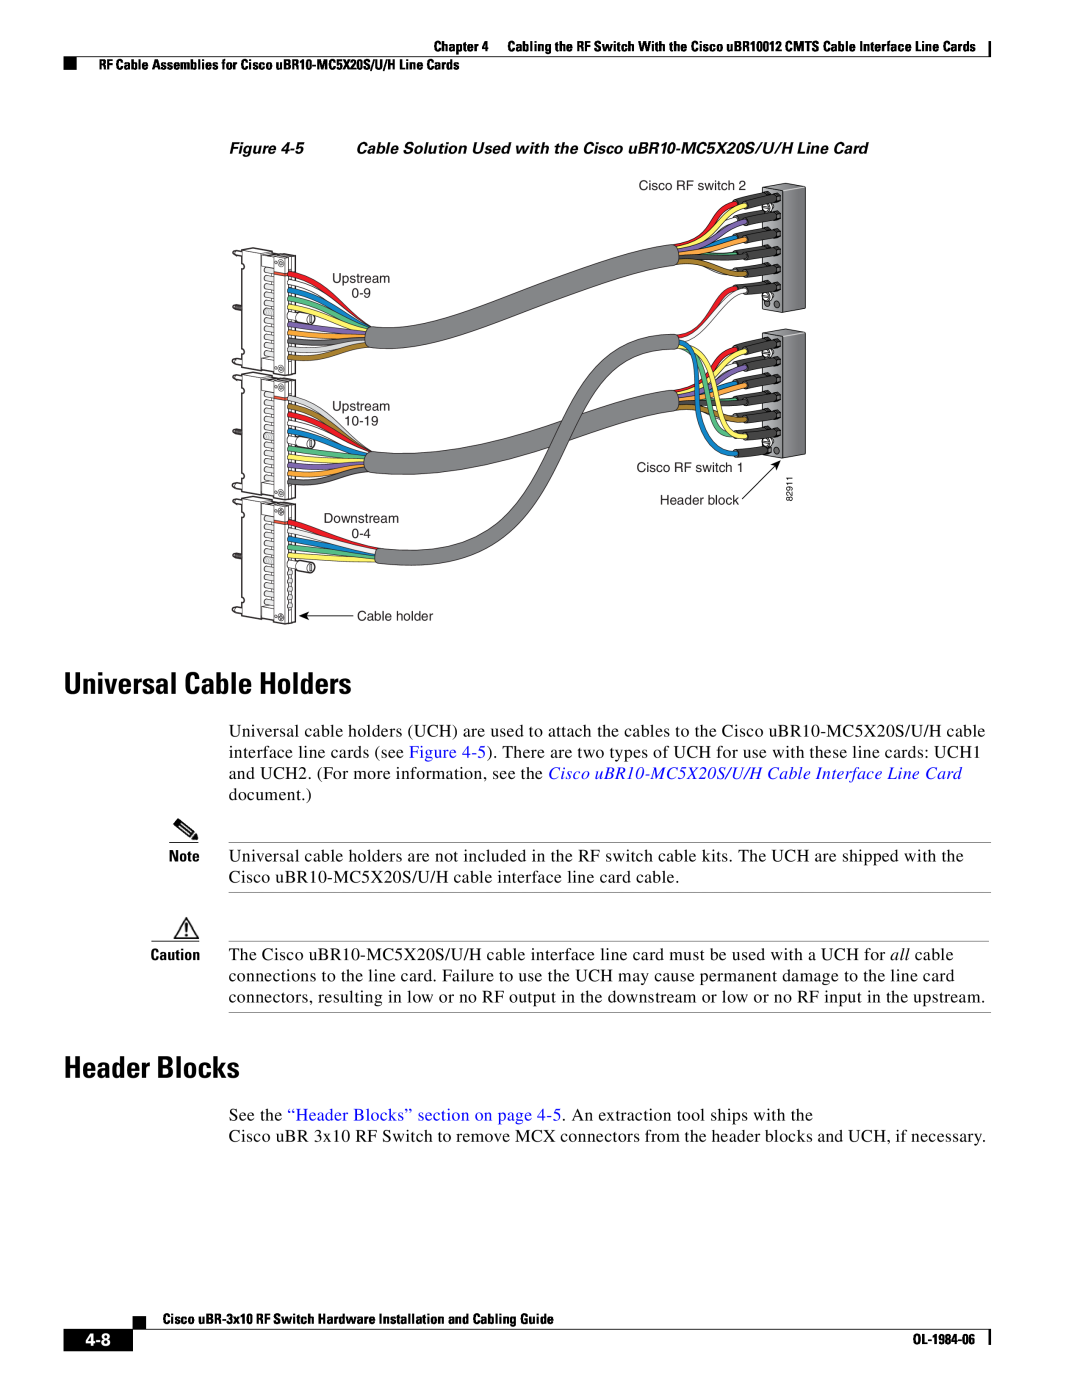 Cisco Systems UBR-3X10 Universal Cable Holders, Header Blocks, Cisco RF switch Upstream 0-9 Upstream 10-19 Cisco RF switch 